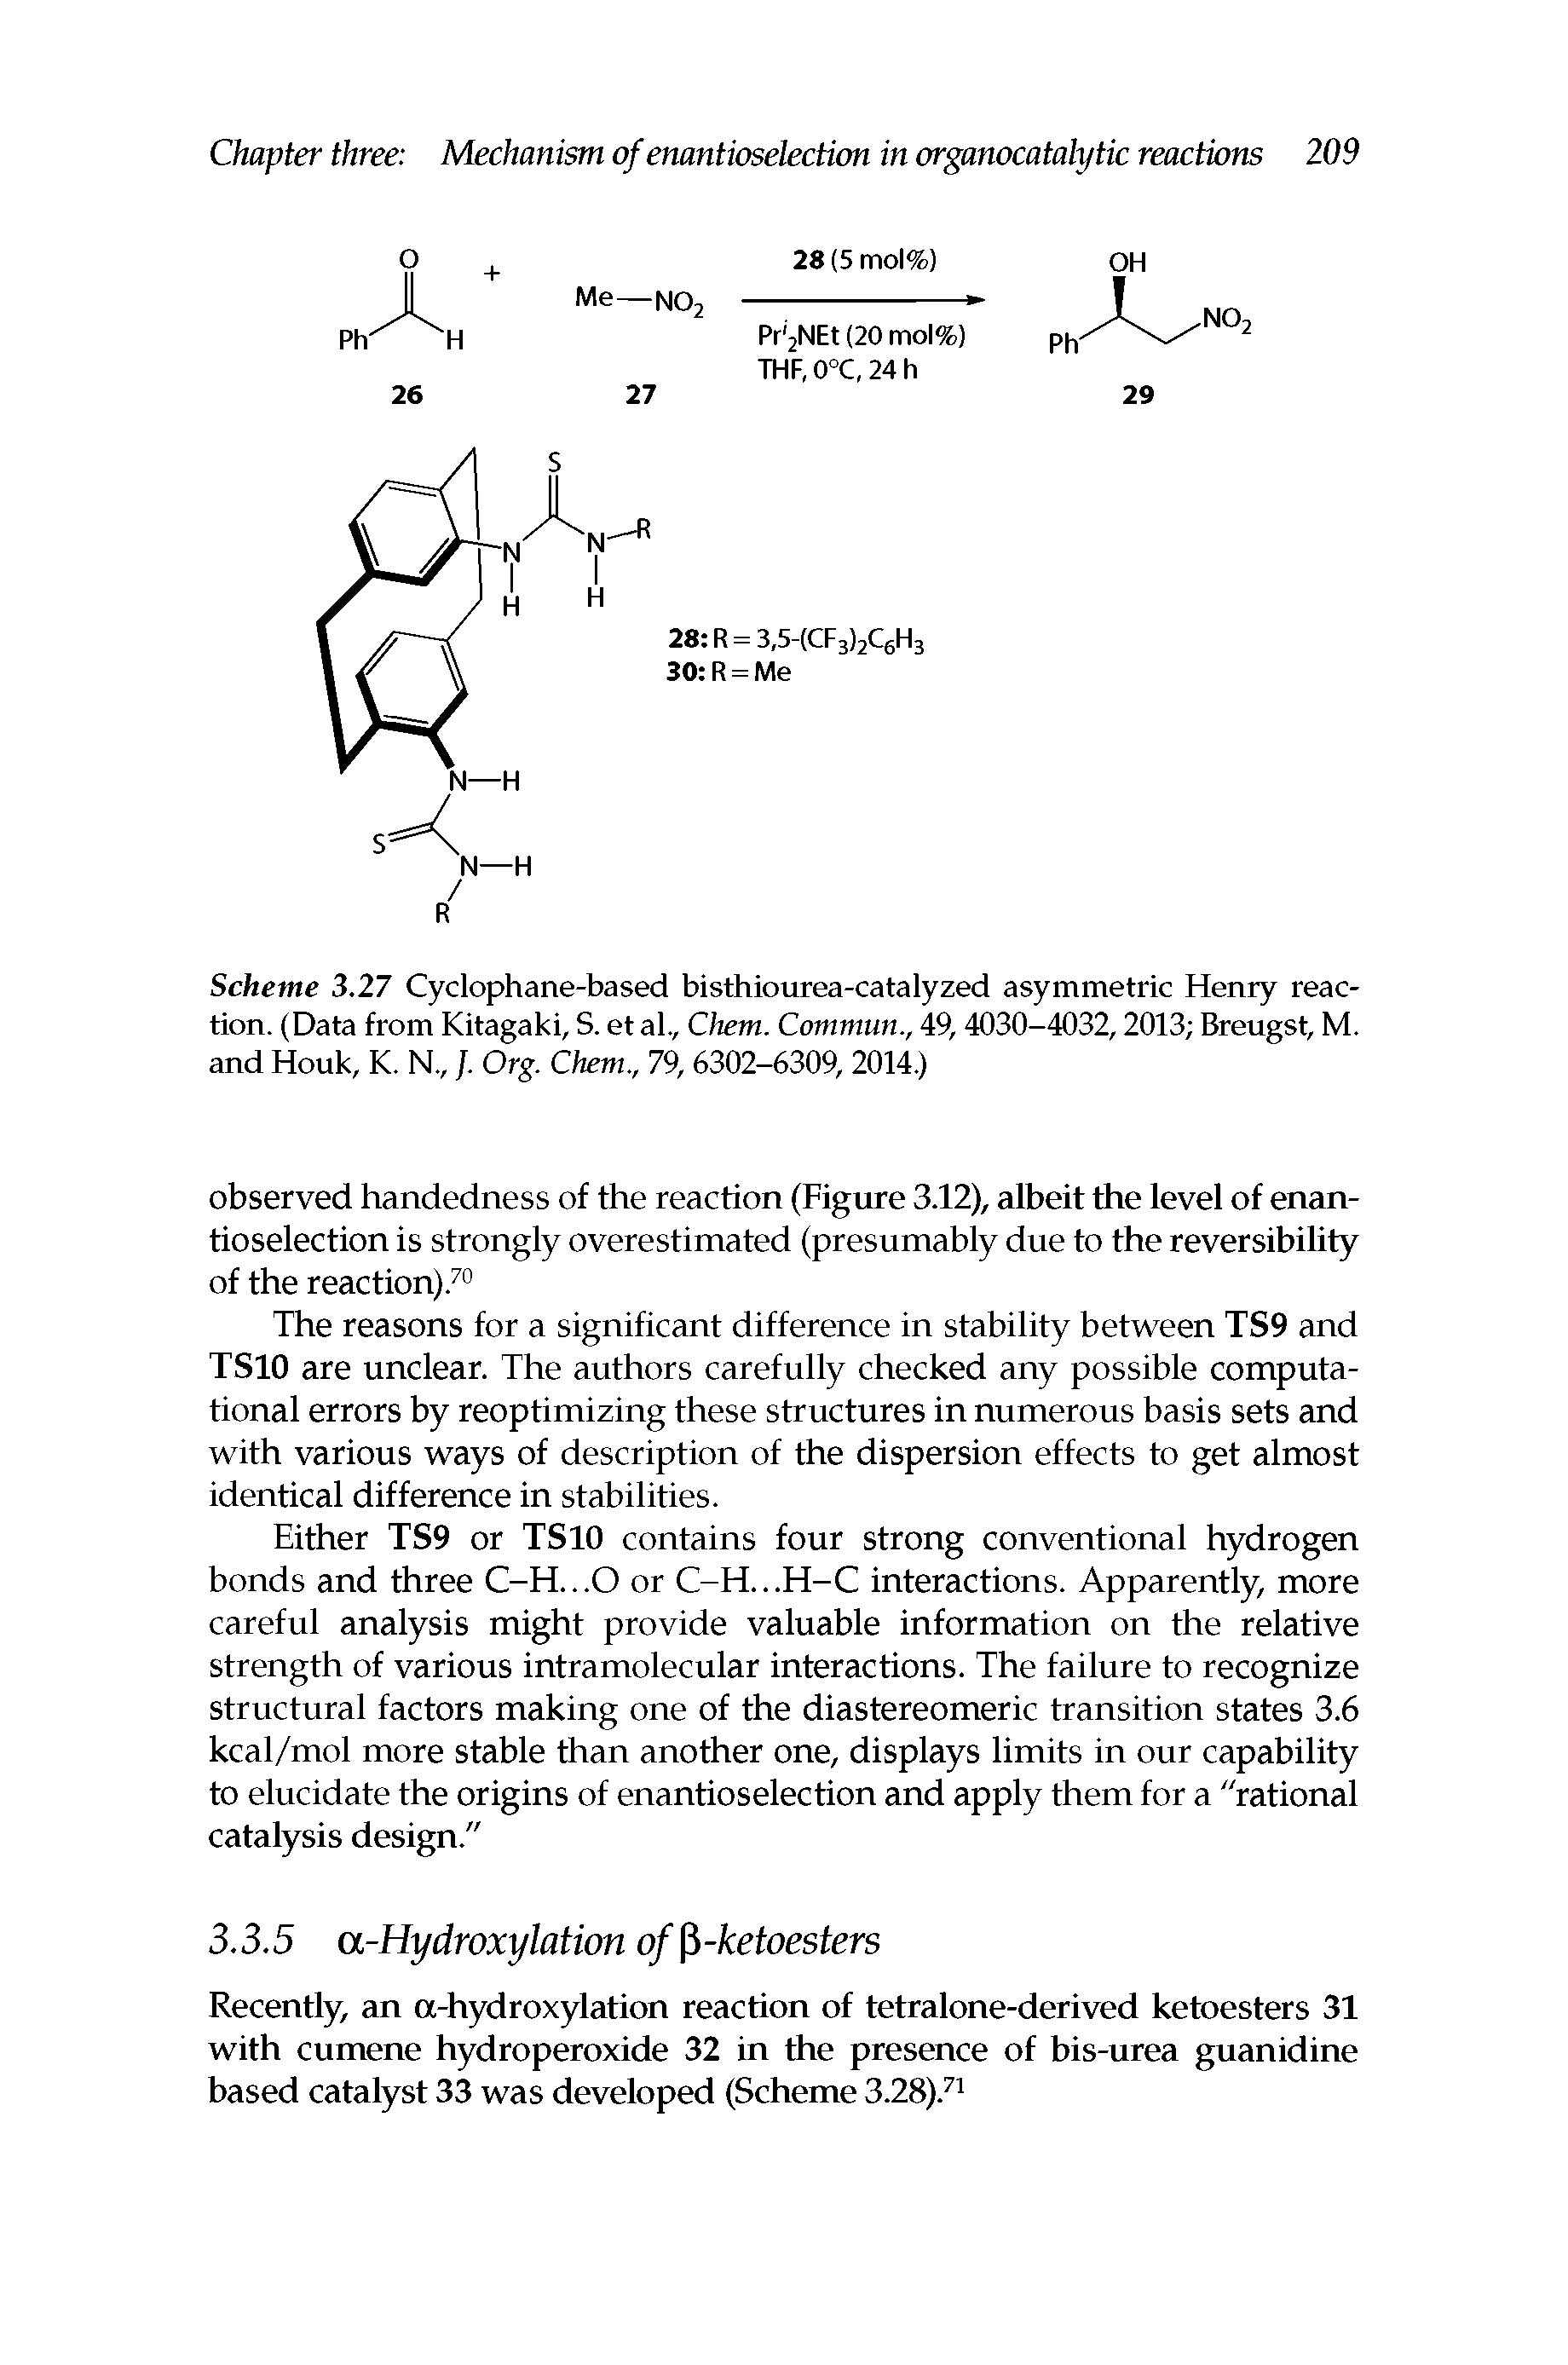 Scheme 3.27 Cyclophane-based bisthiourea-catalyzed asymmetric Henry reaction. (Data from Kitagaki, S. et al., Chem. Commun., 49,4030-4032,2013 Breugst, M. and Houk, K. N., /. Org. Chem., 79, 6302-6309, 2014.)...